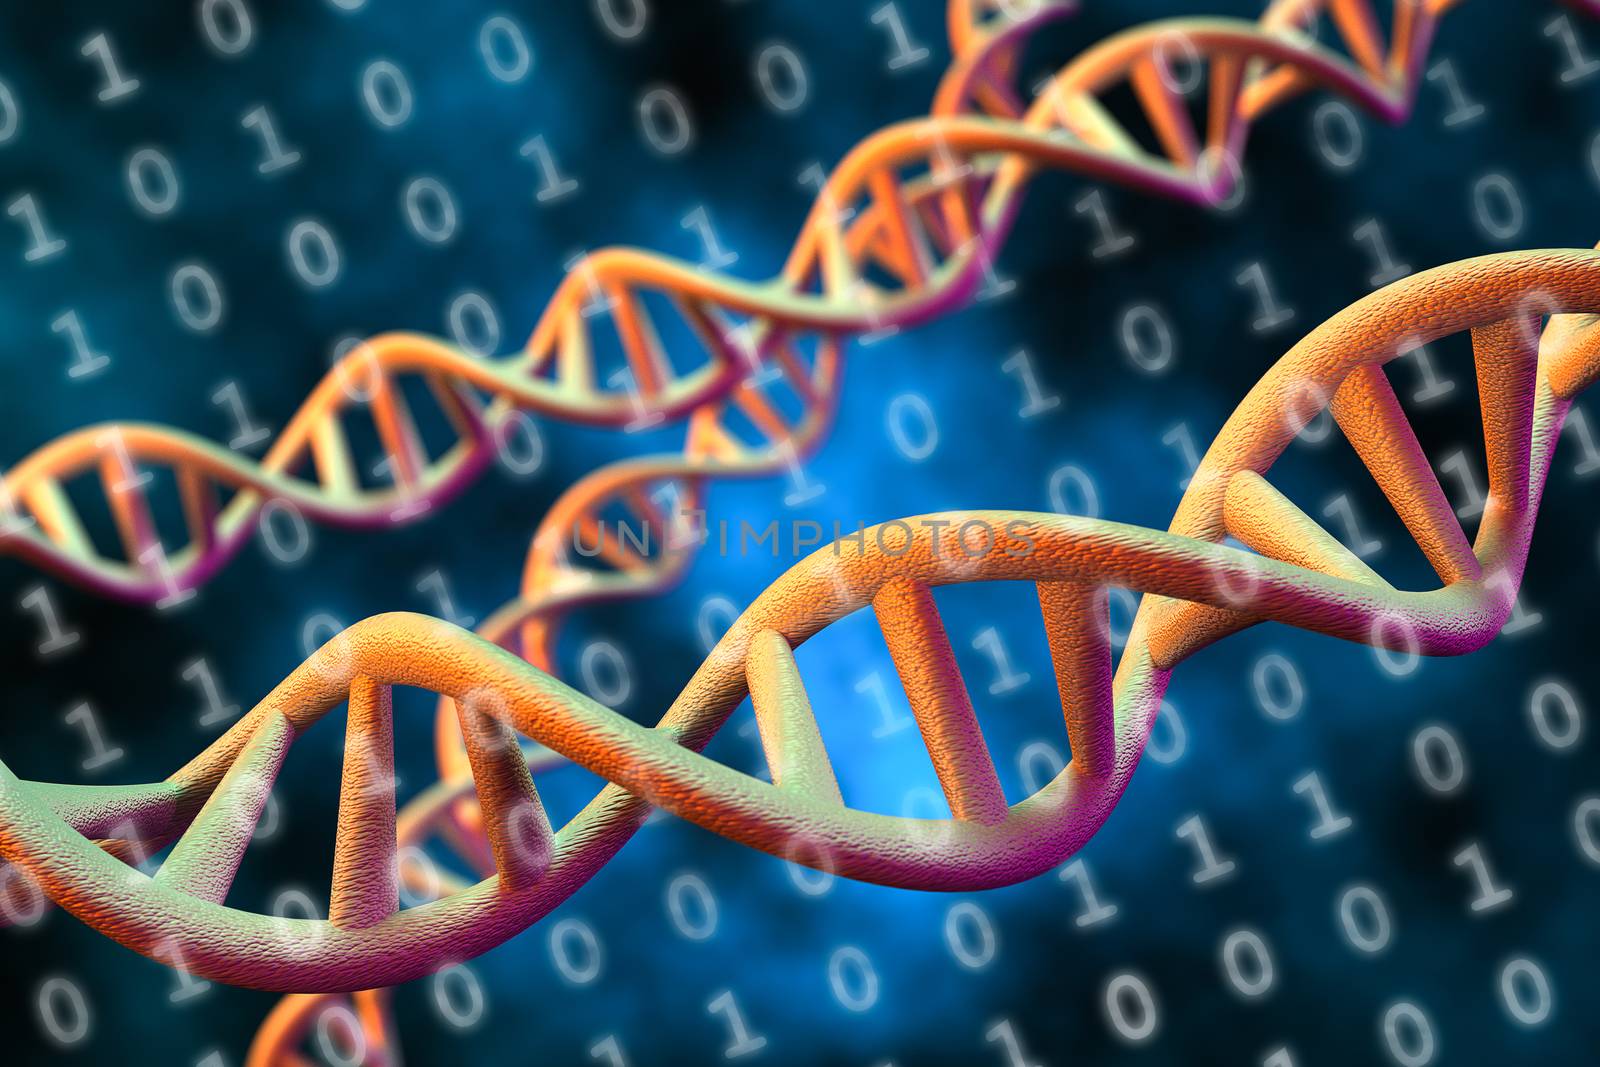 3D rendering of DNA digital data storage concept.